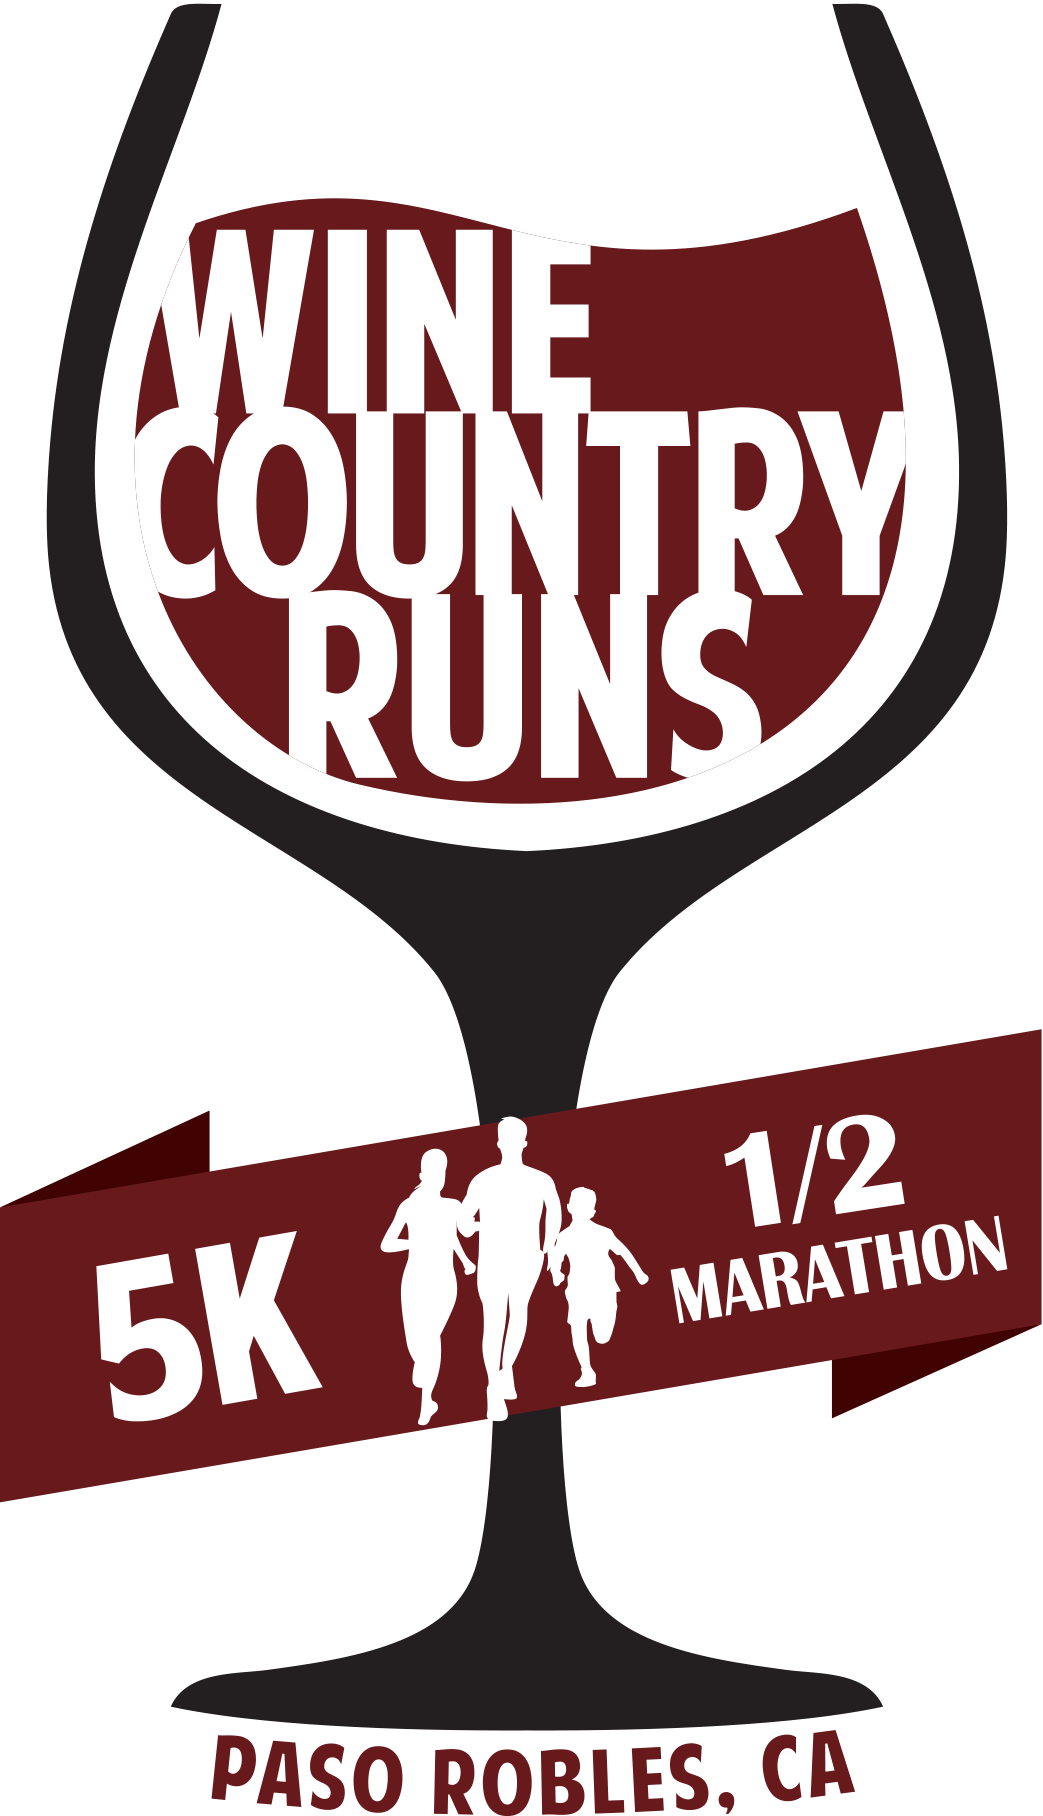 Wine Country Runs Half Marathon logo on RaceRaves